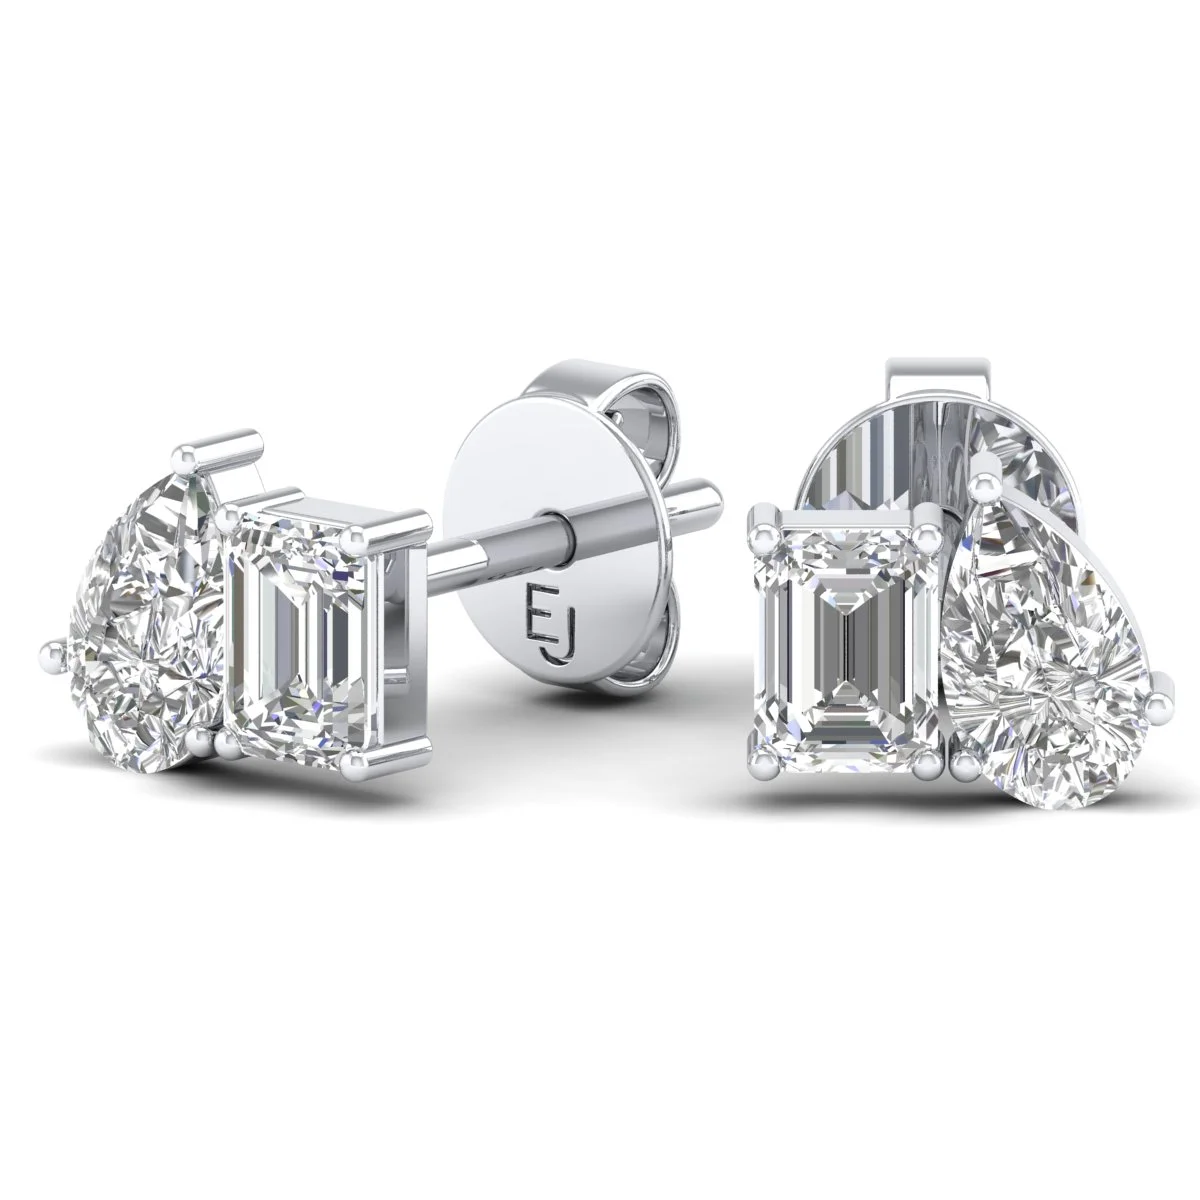 Diamond Earrings | Buy Diamond Studded Earrings Online | ORRA